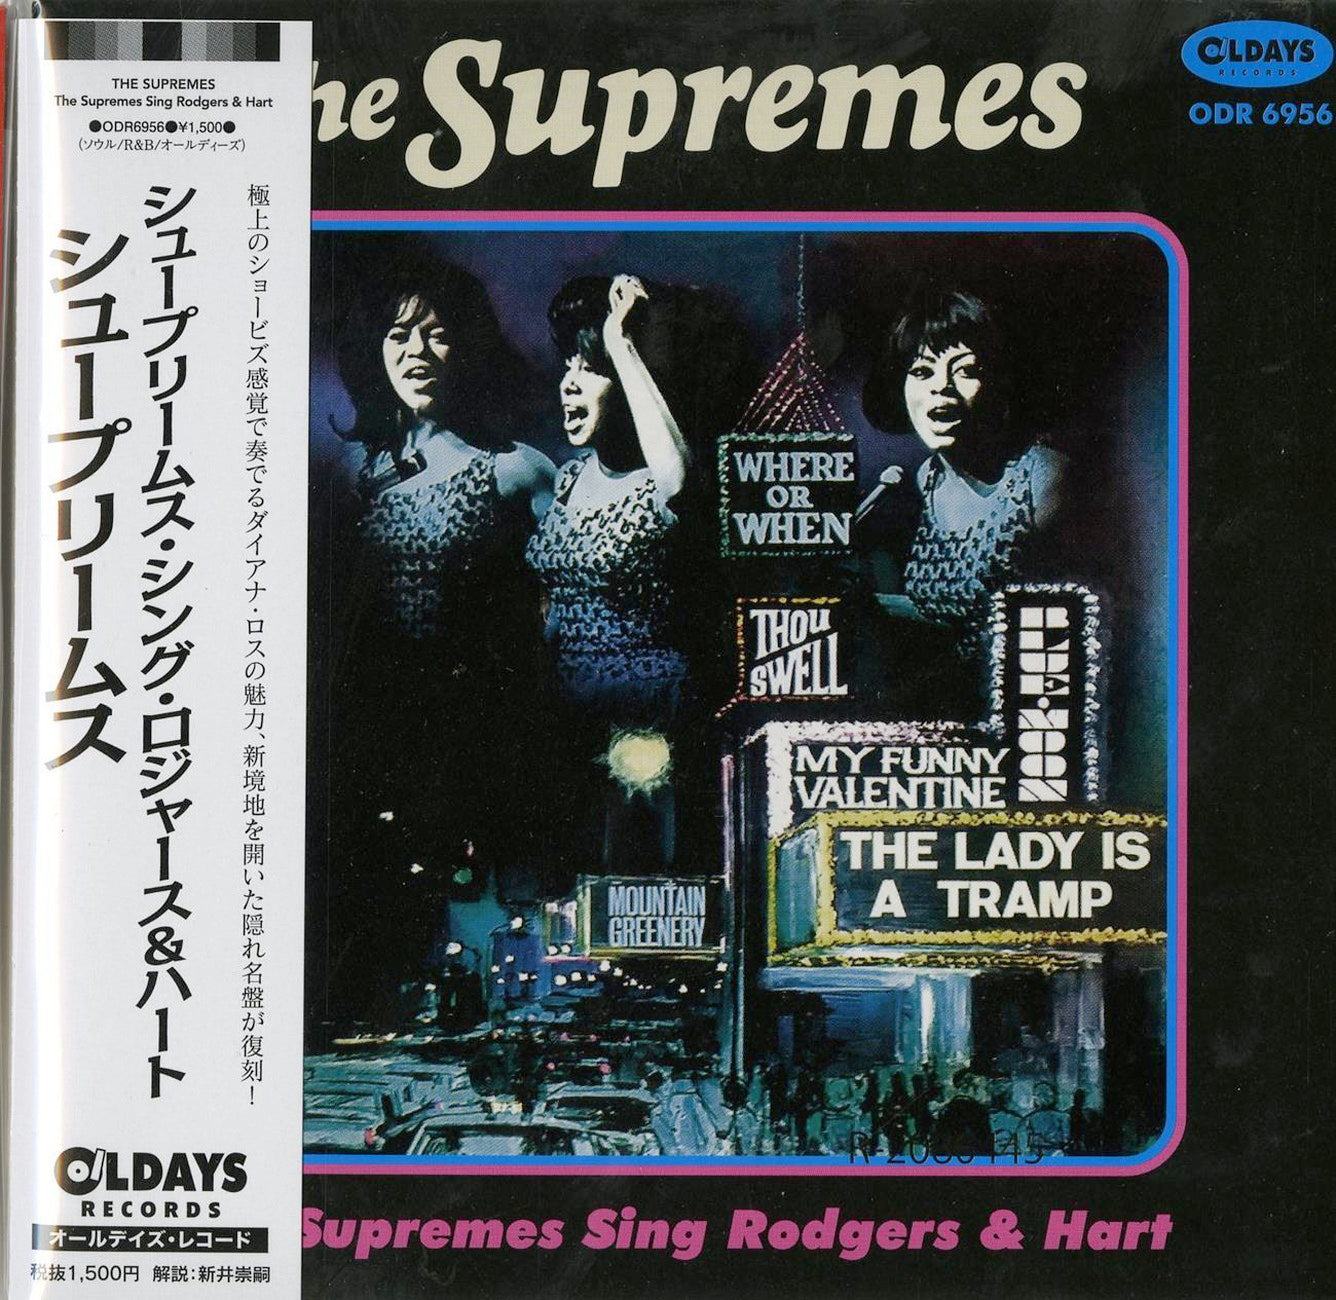 The Supremes - The Supremes Sing Rodgers & Hart - Japan  Mini LP CD Bonus Track